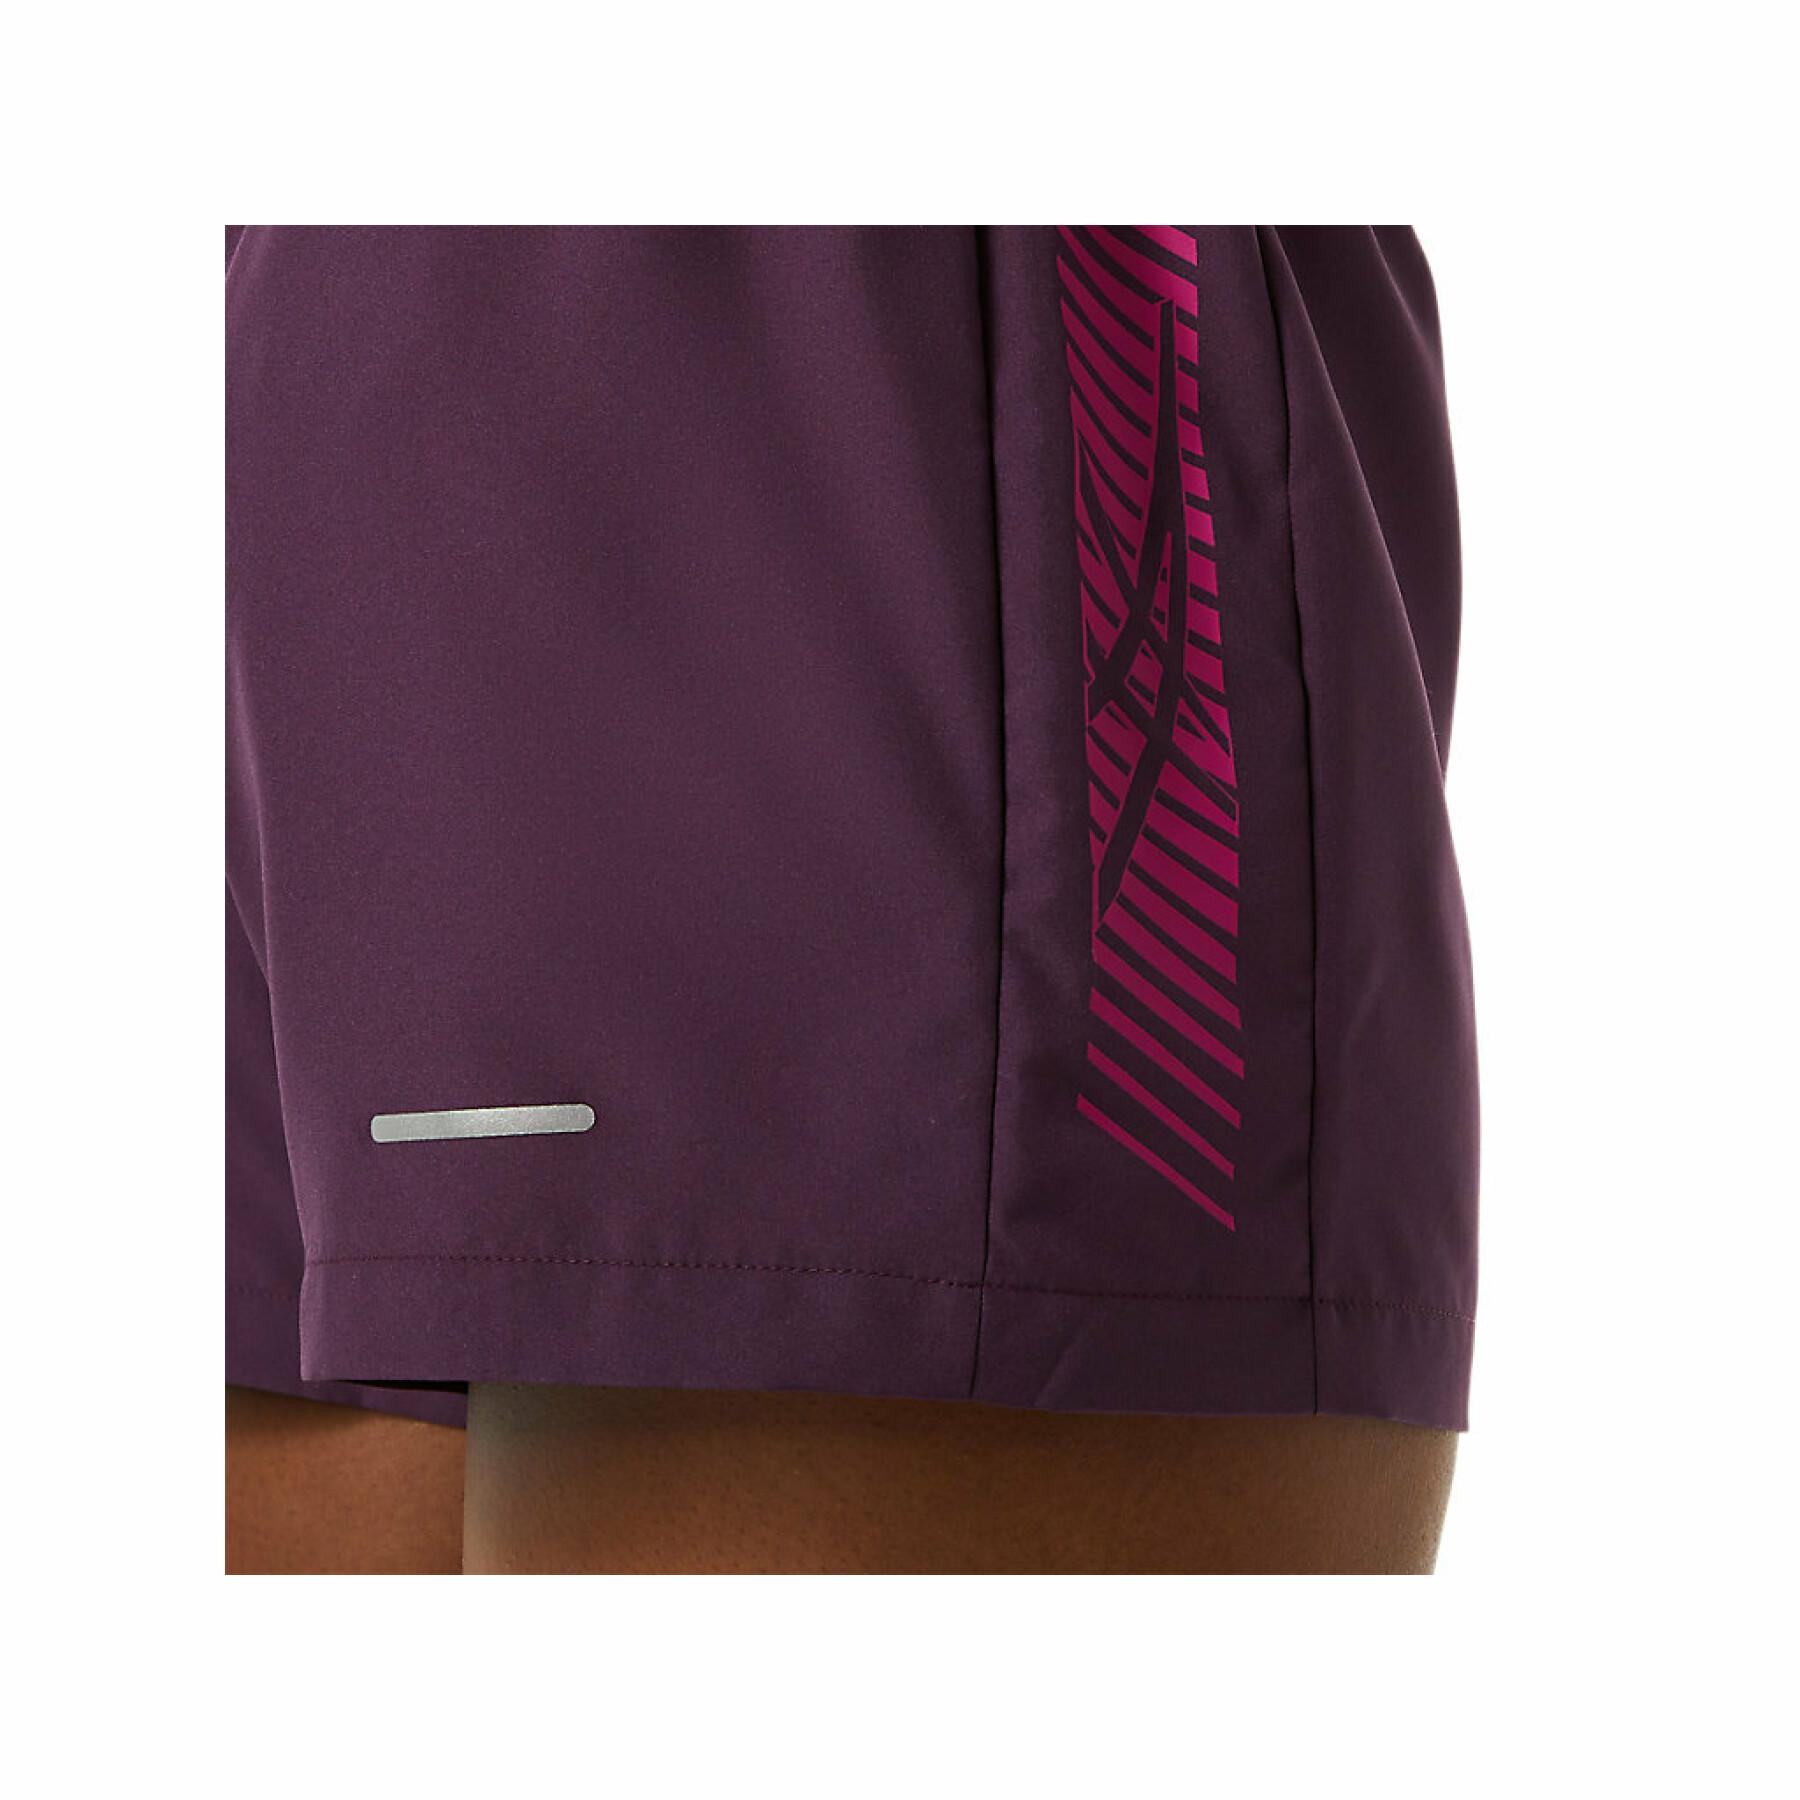 Damen-Shorts Asics Icon 4in